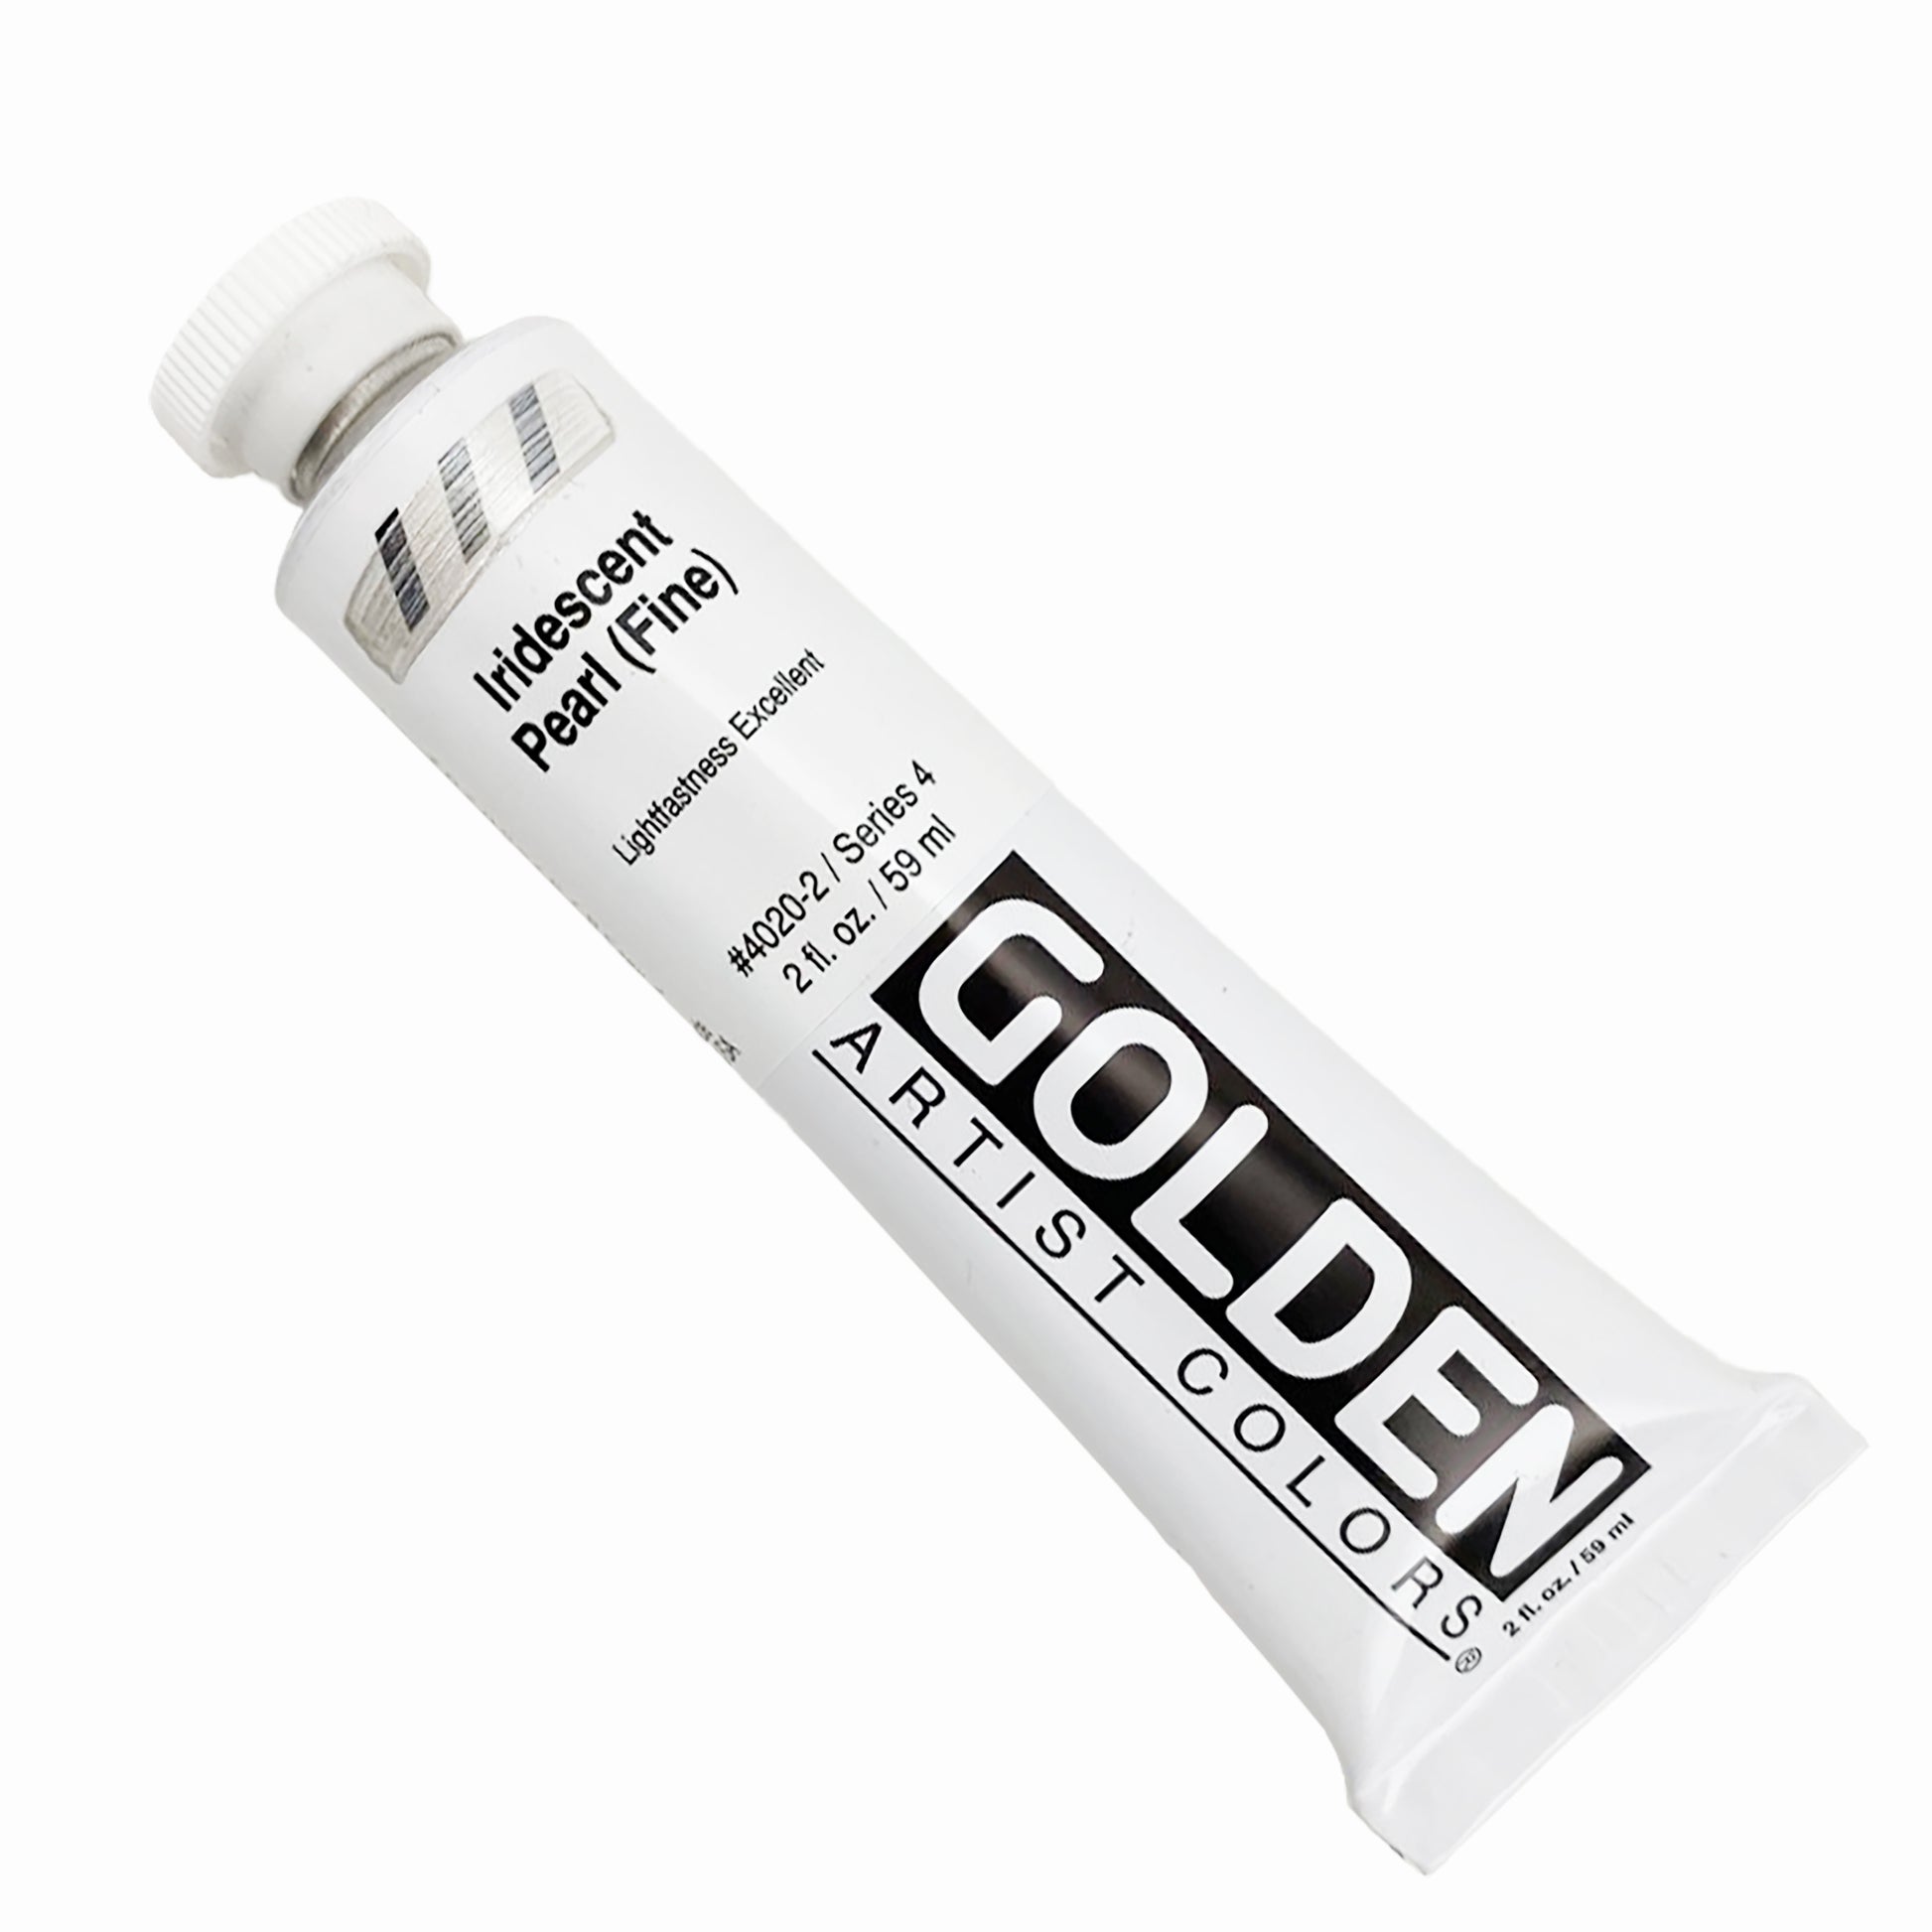 Golden Acrylics Heavy Body 16oz Titan Buff